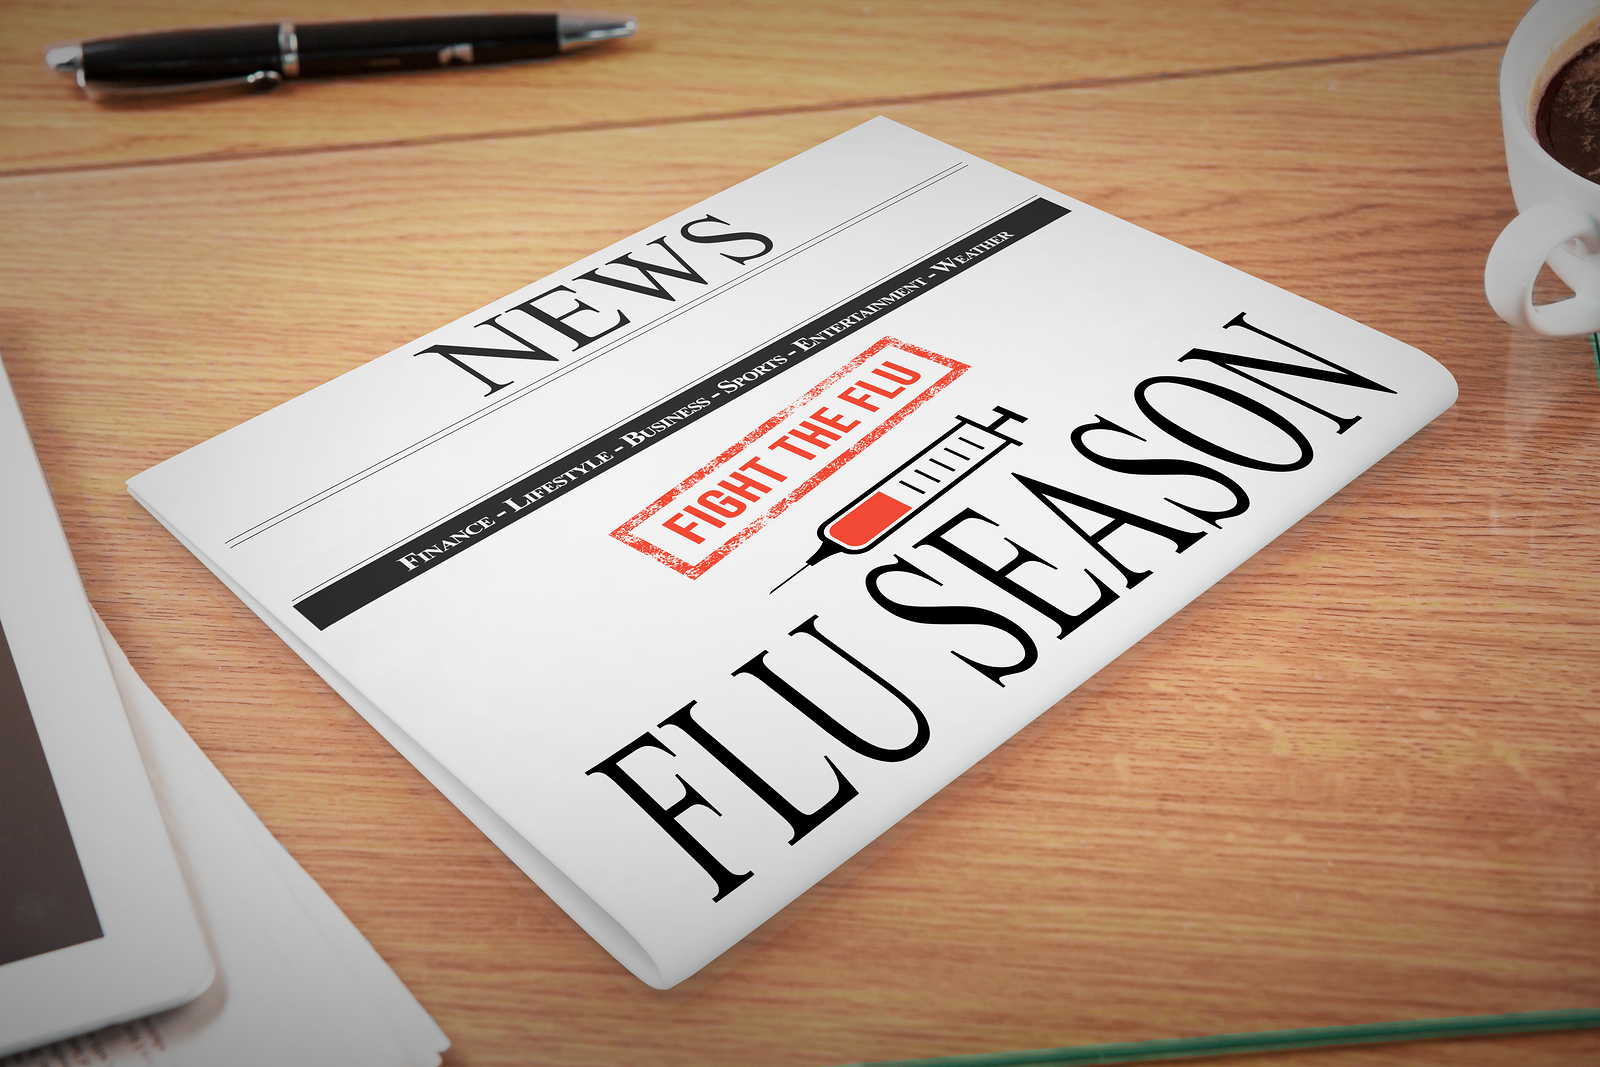 Flu Season Headline